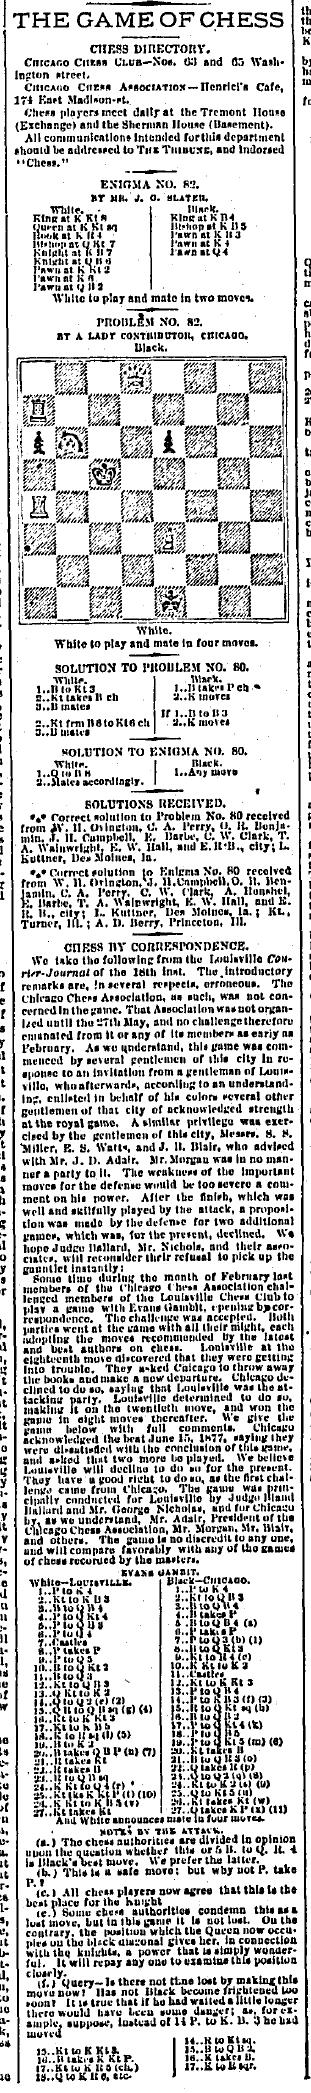 1877.06.24-01 Chicago Tribune.jpg